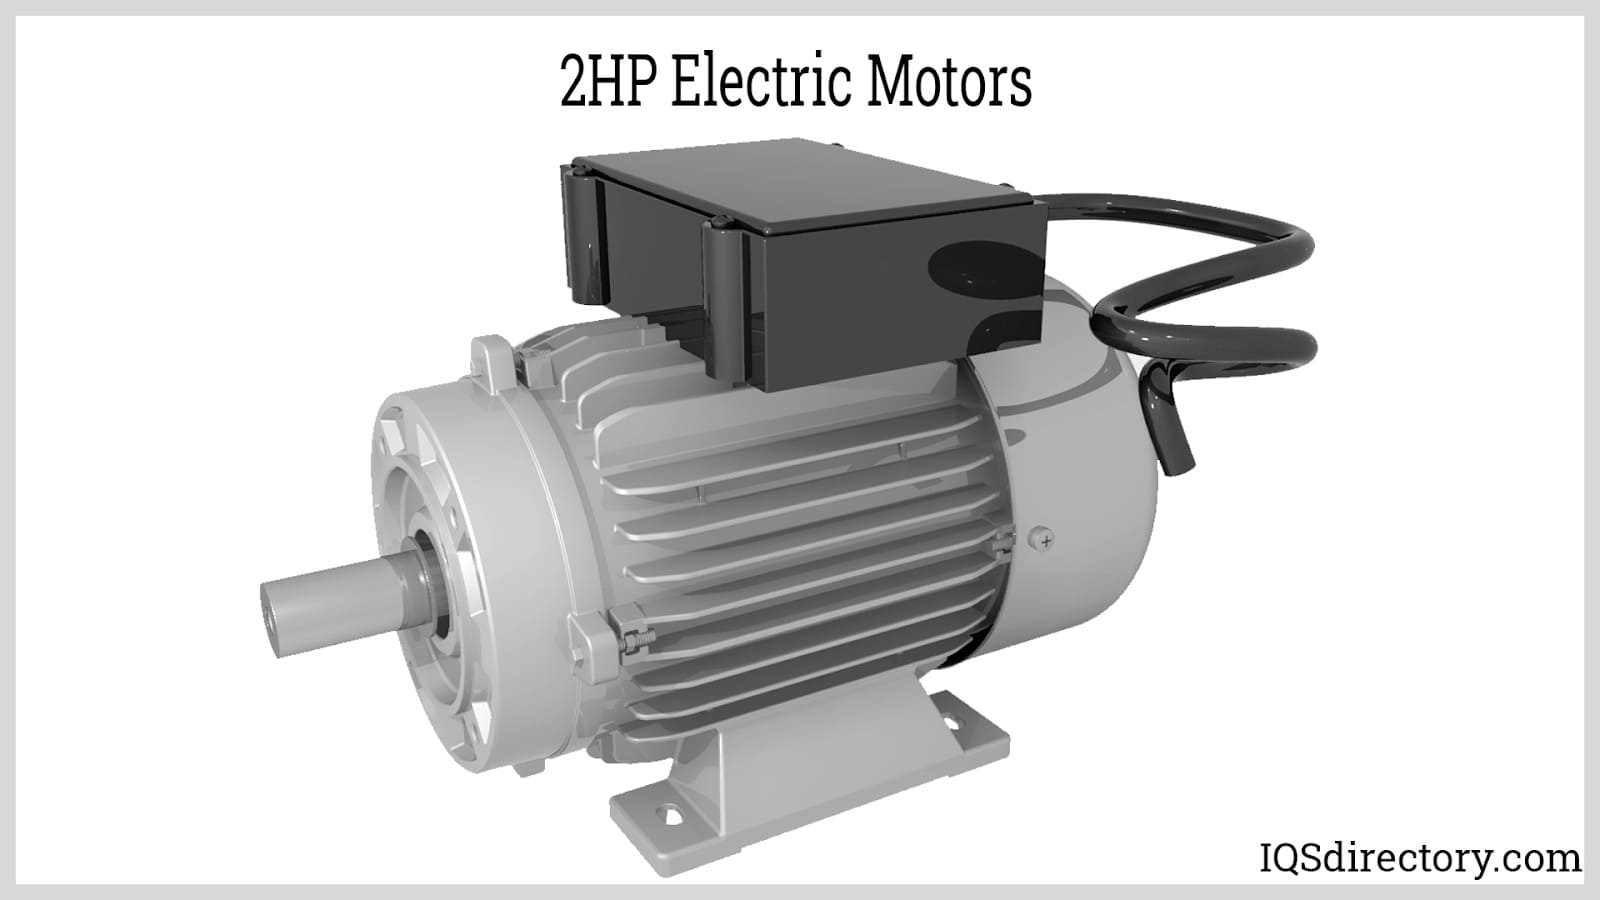 2HP Electric Motors